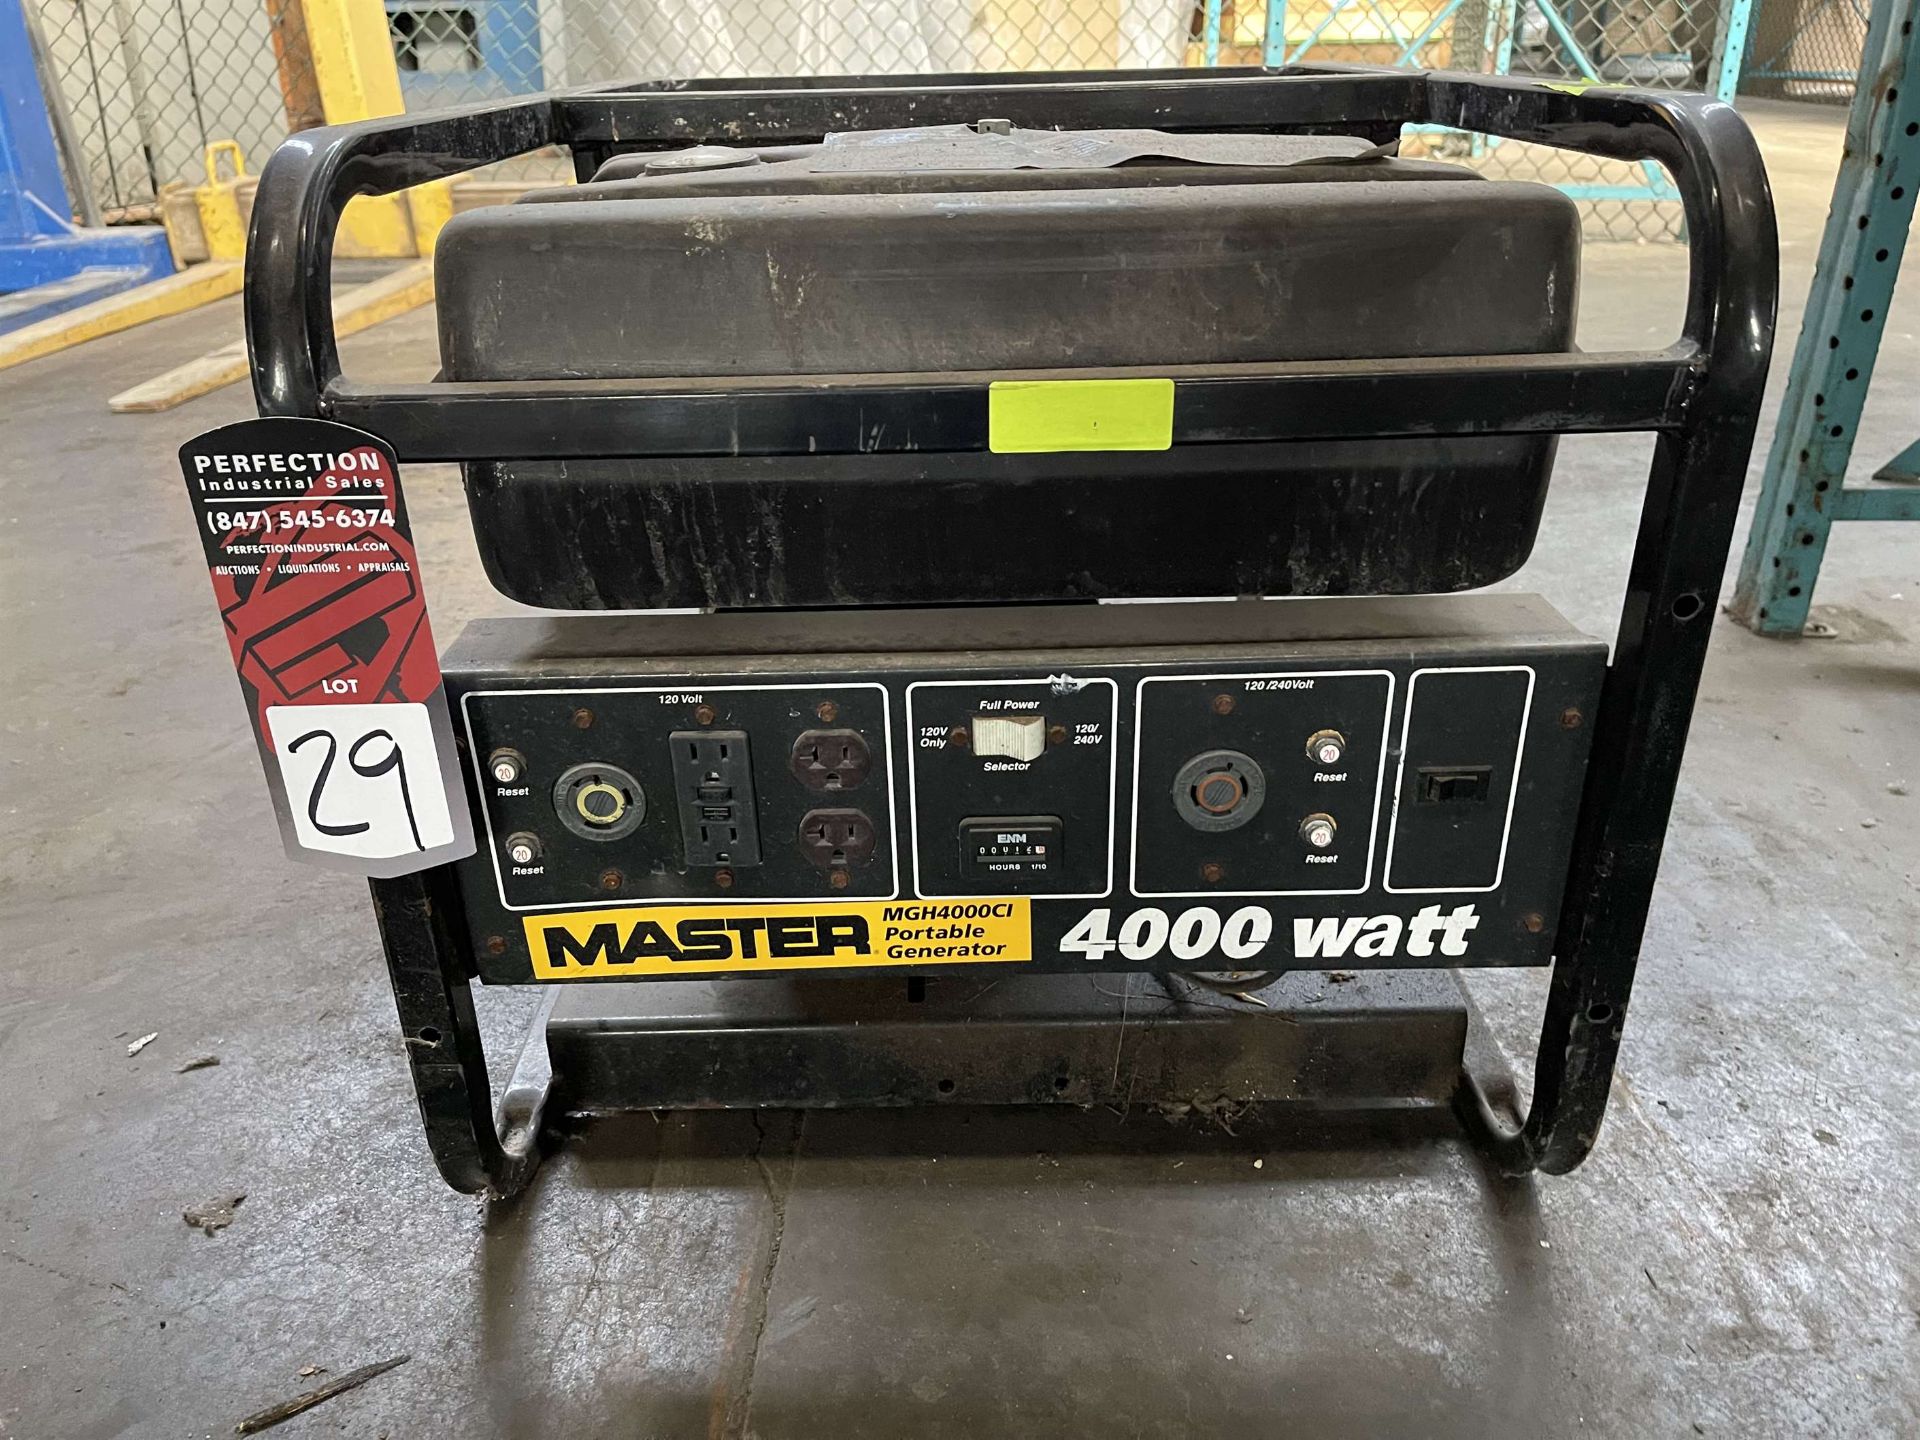 MASTER MGH4000CI Portable Gas Generator, 4000W, 3600 RPM, 120/240V, HONDA GX240 8.0 Motor - Image 2 of 6